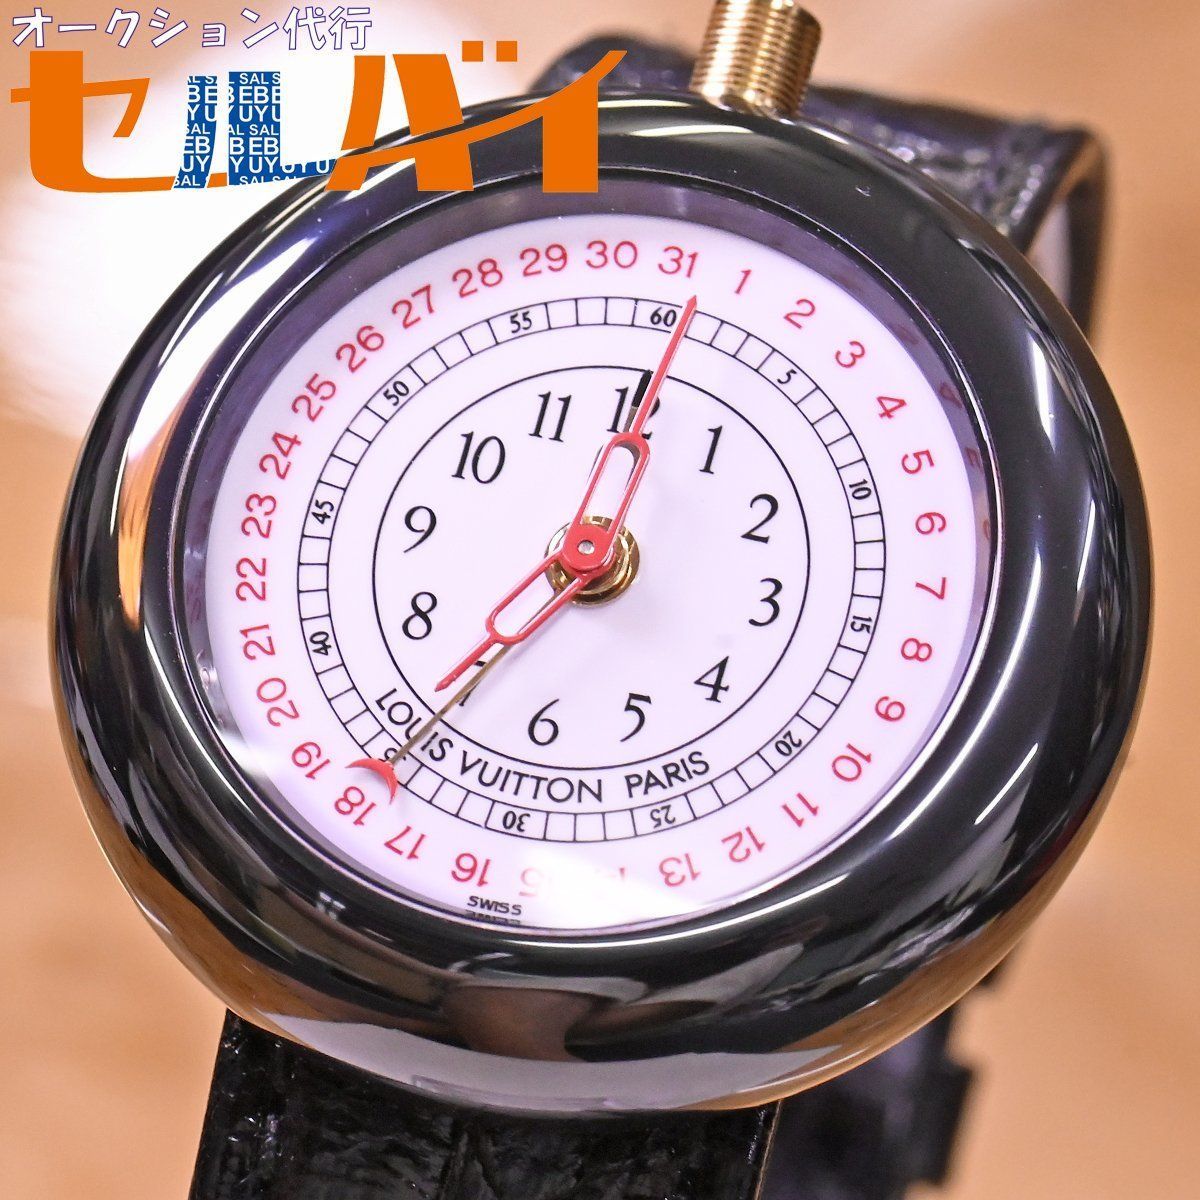 Louis Vuitton メンズ腕時計用交換用ベルト